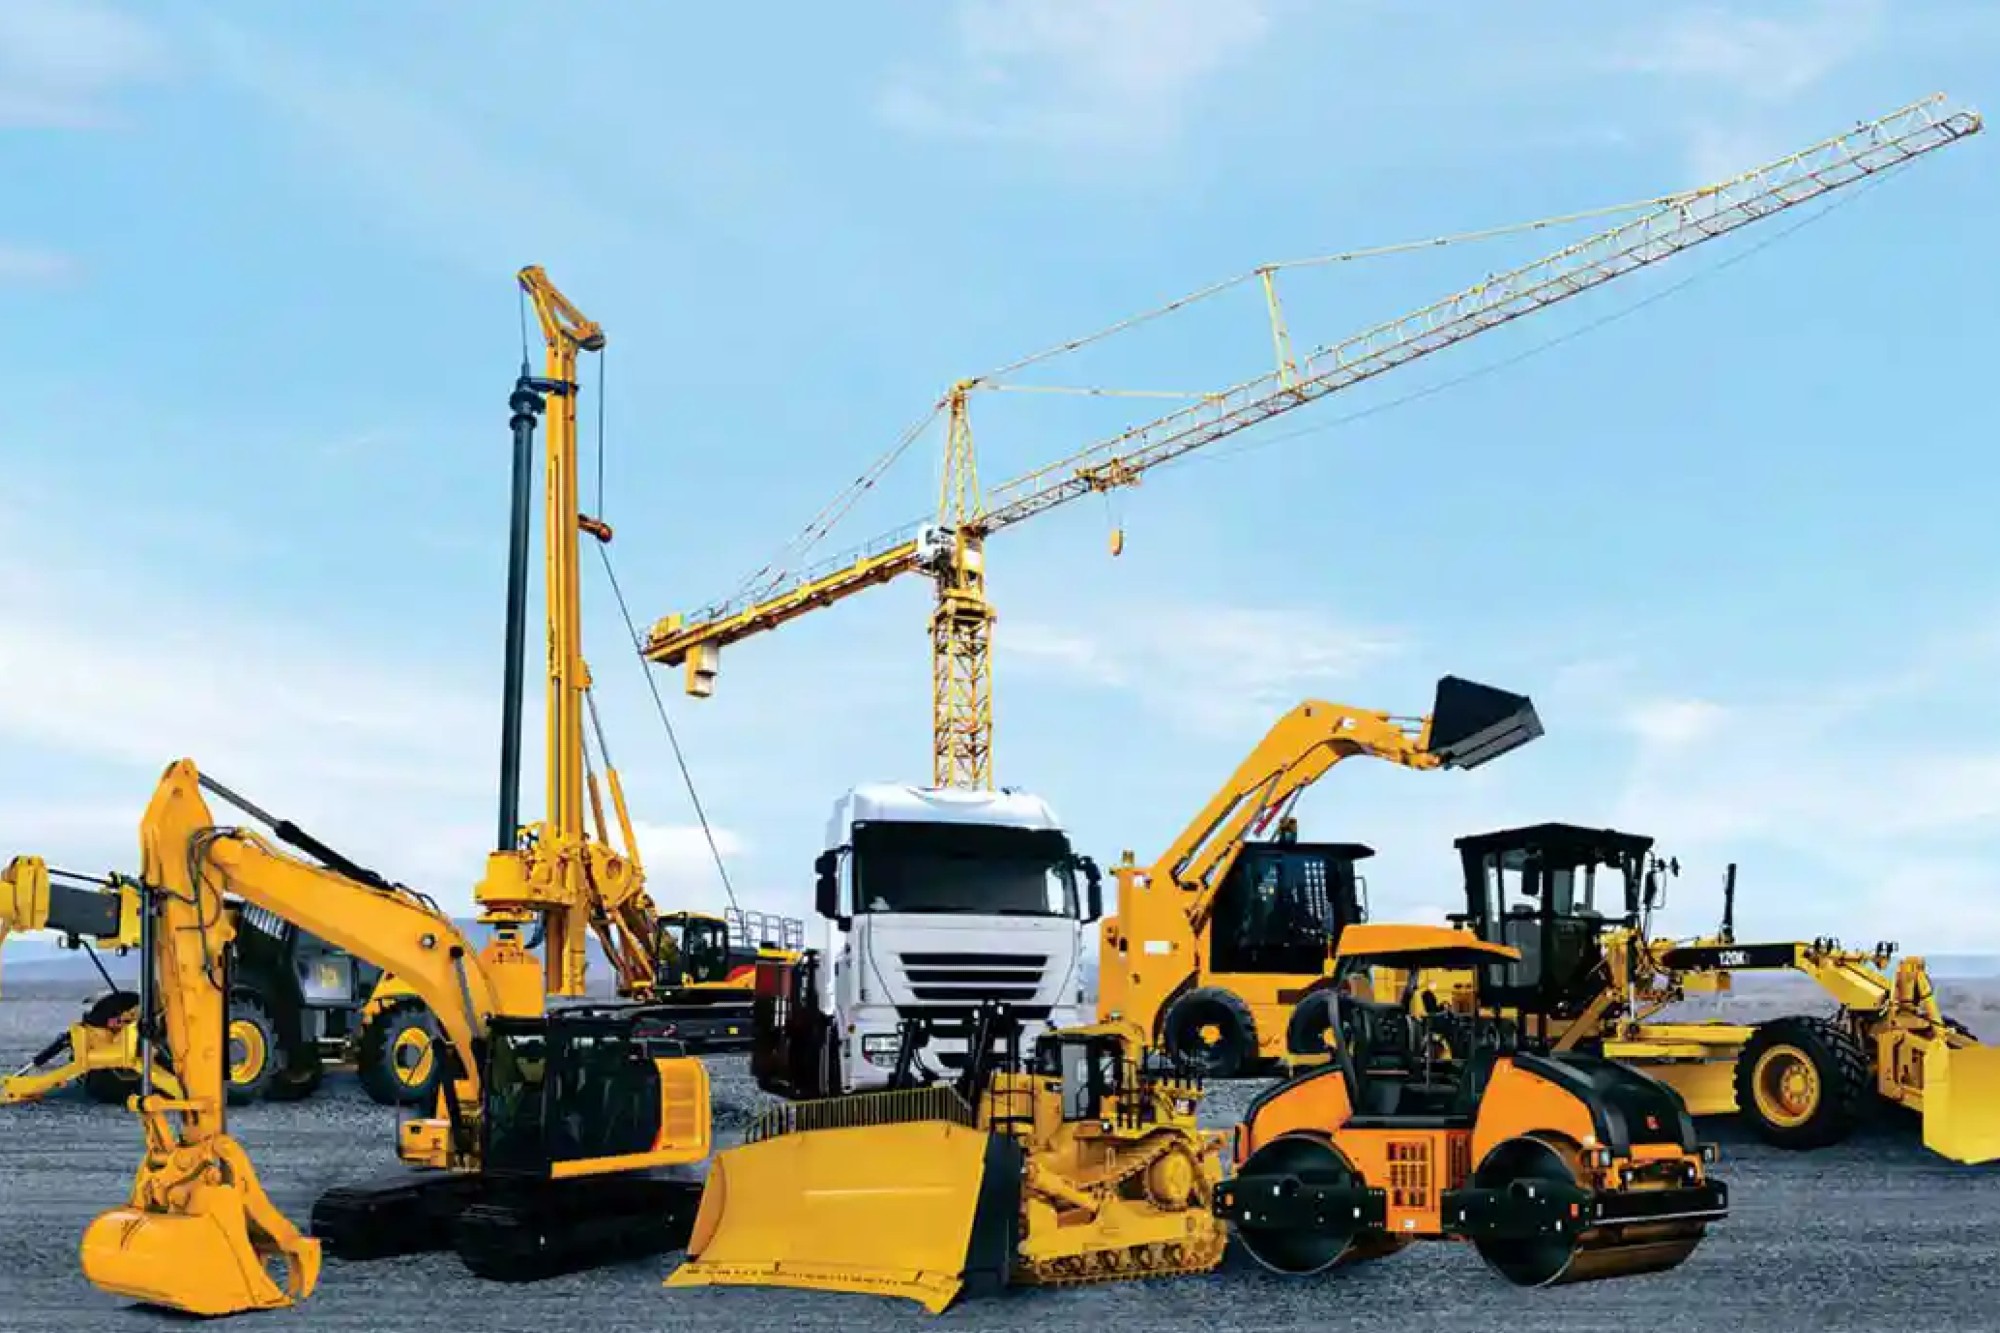 Construction equipment rental market